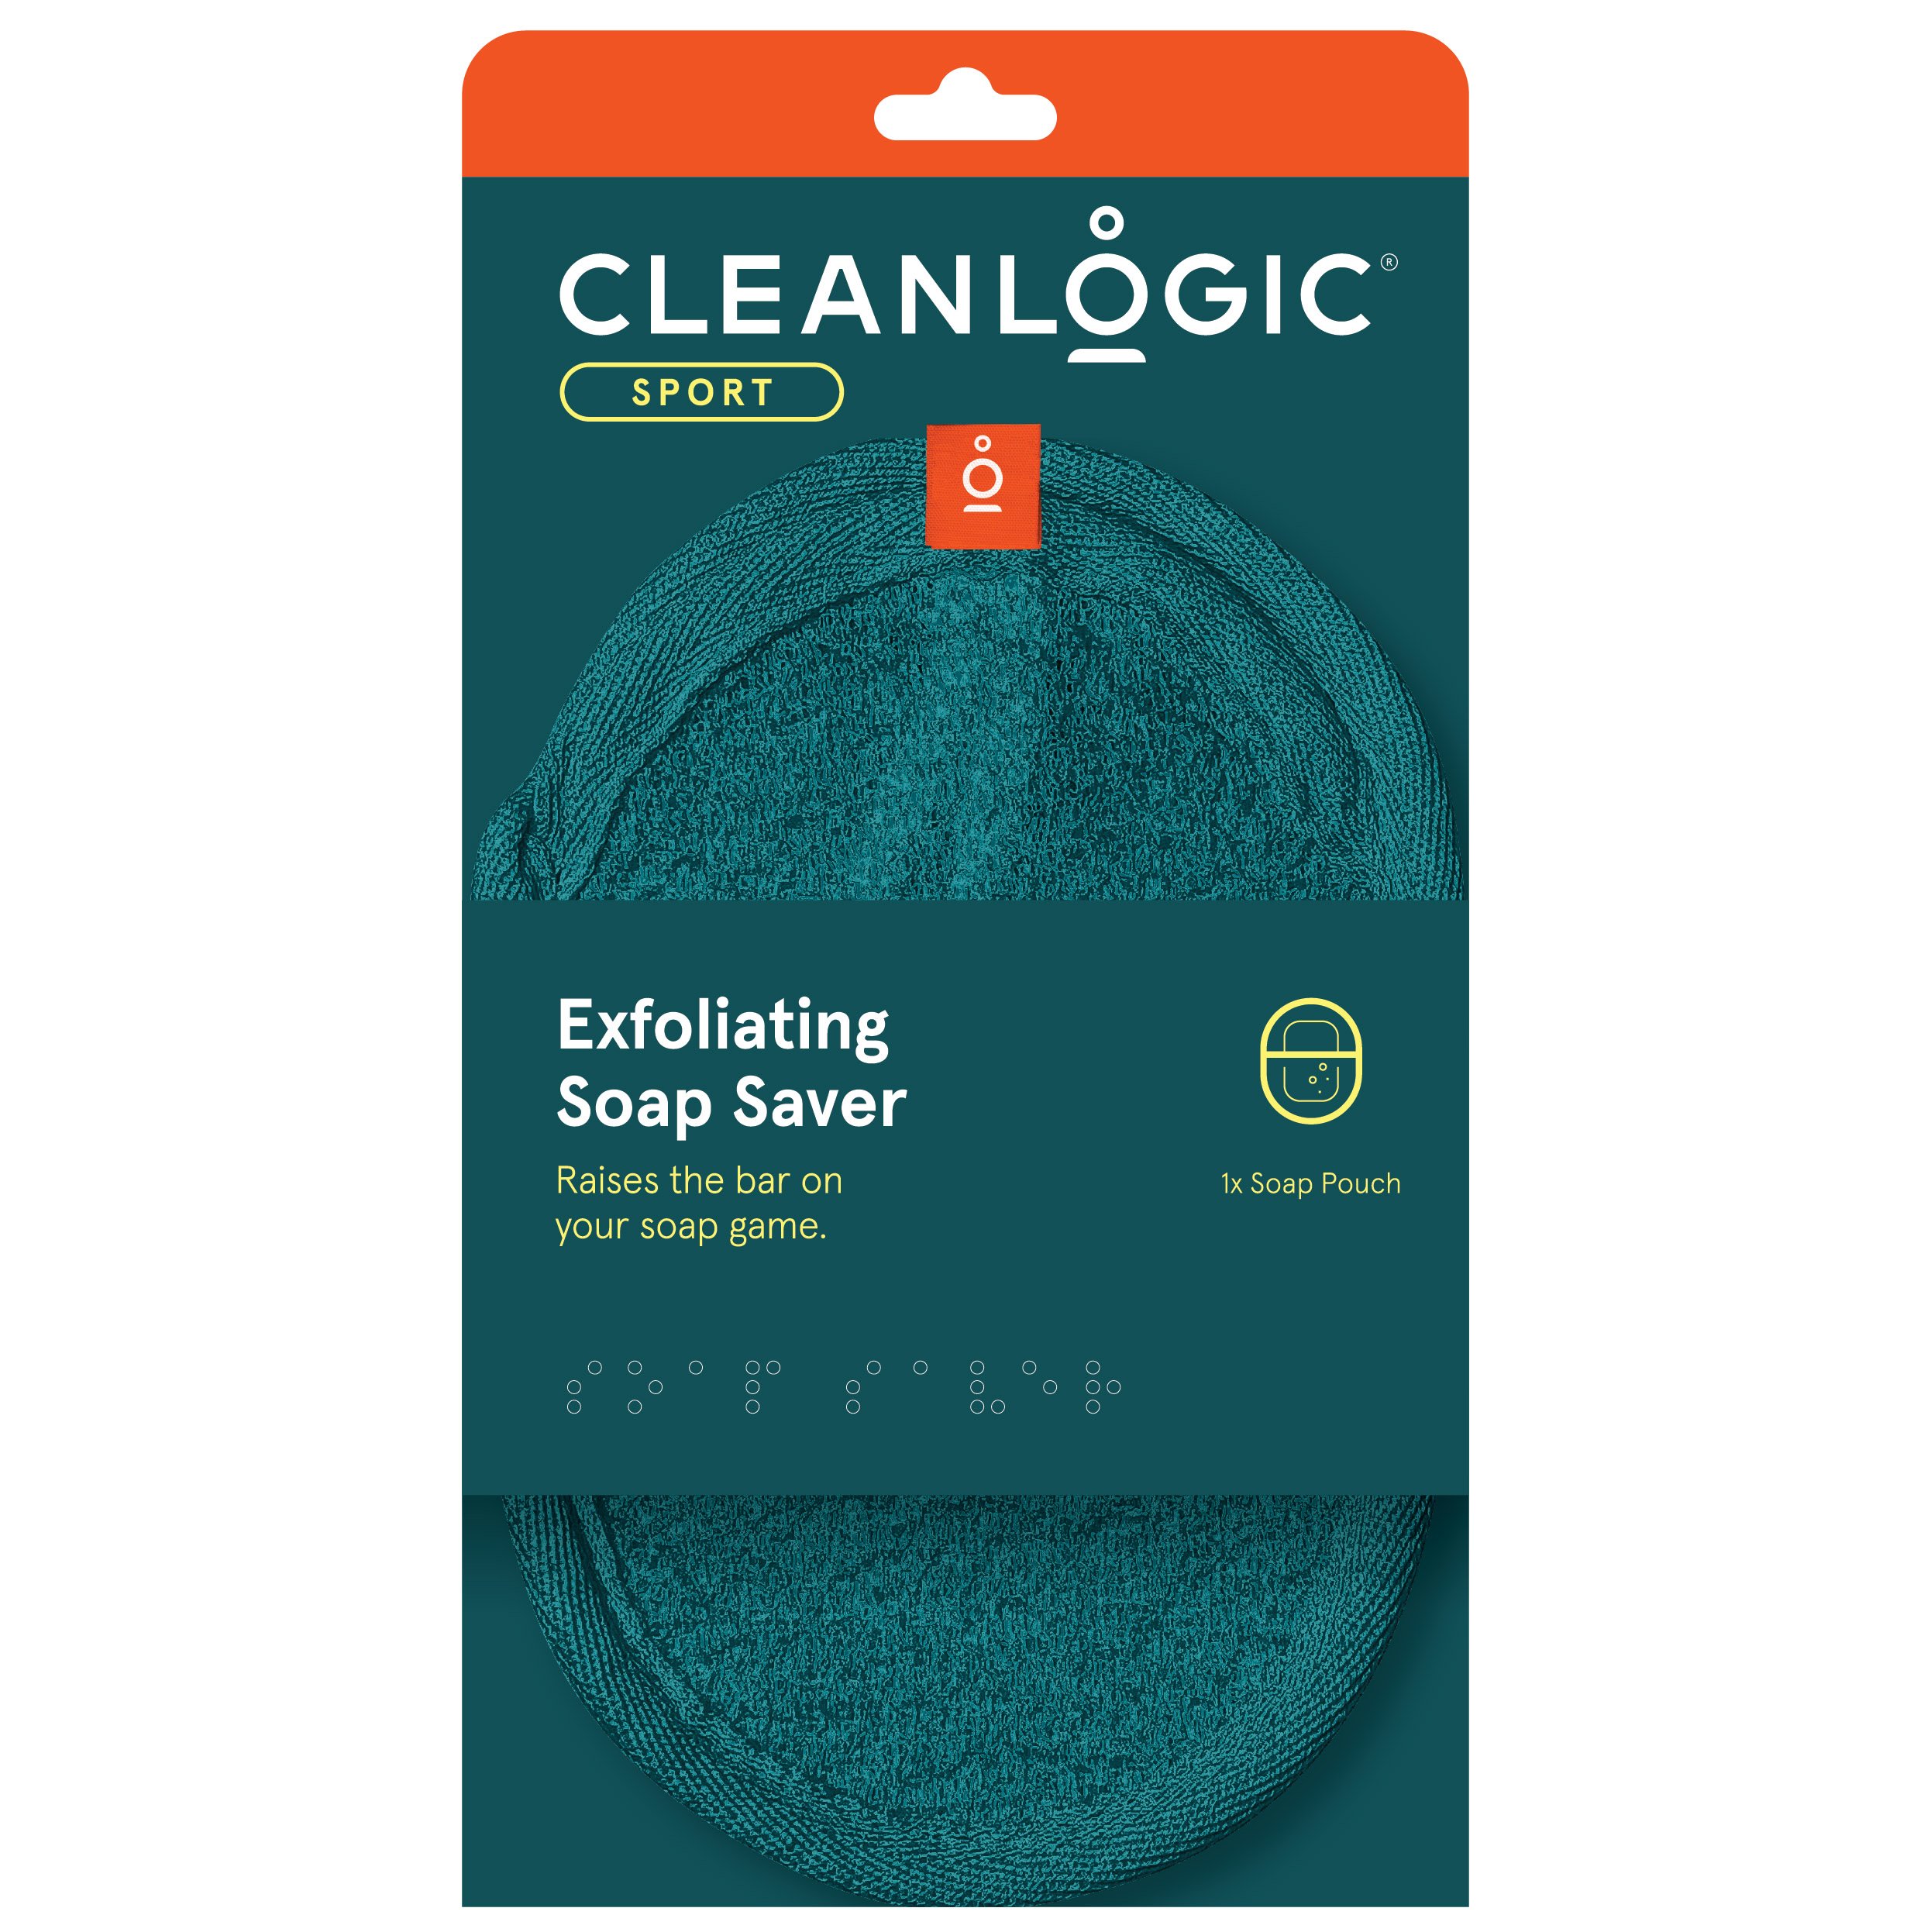 Cleanlogic Sport Exfoliating Soap Saver